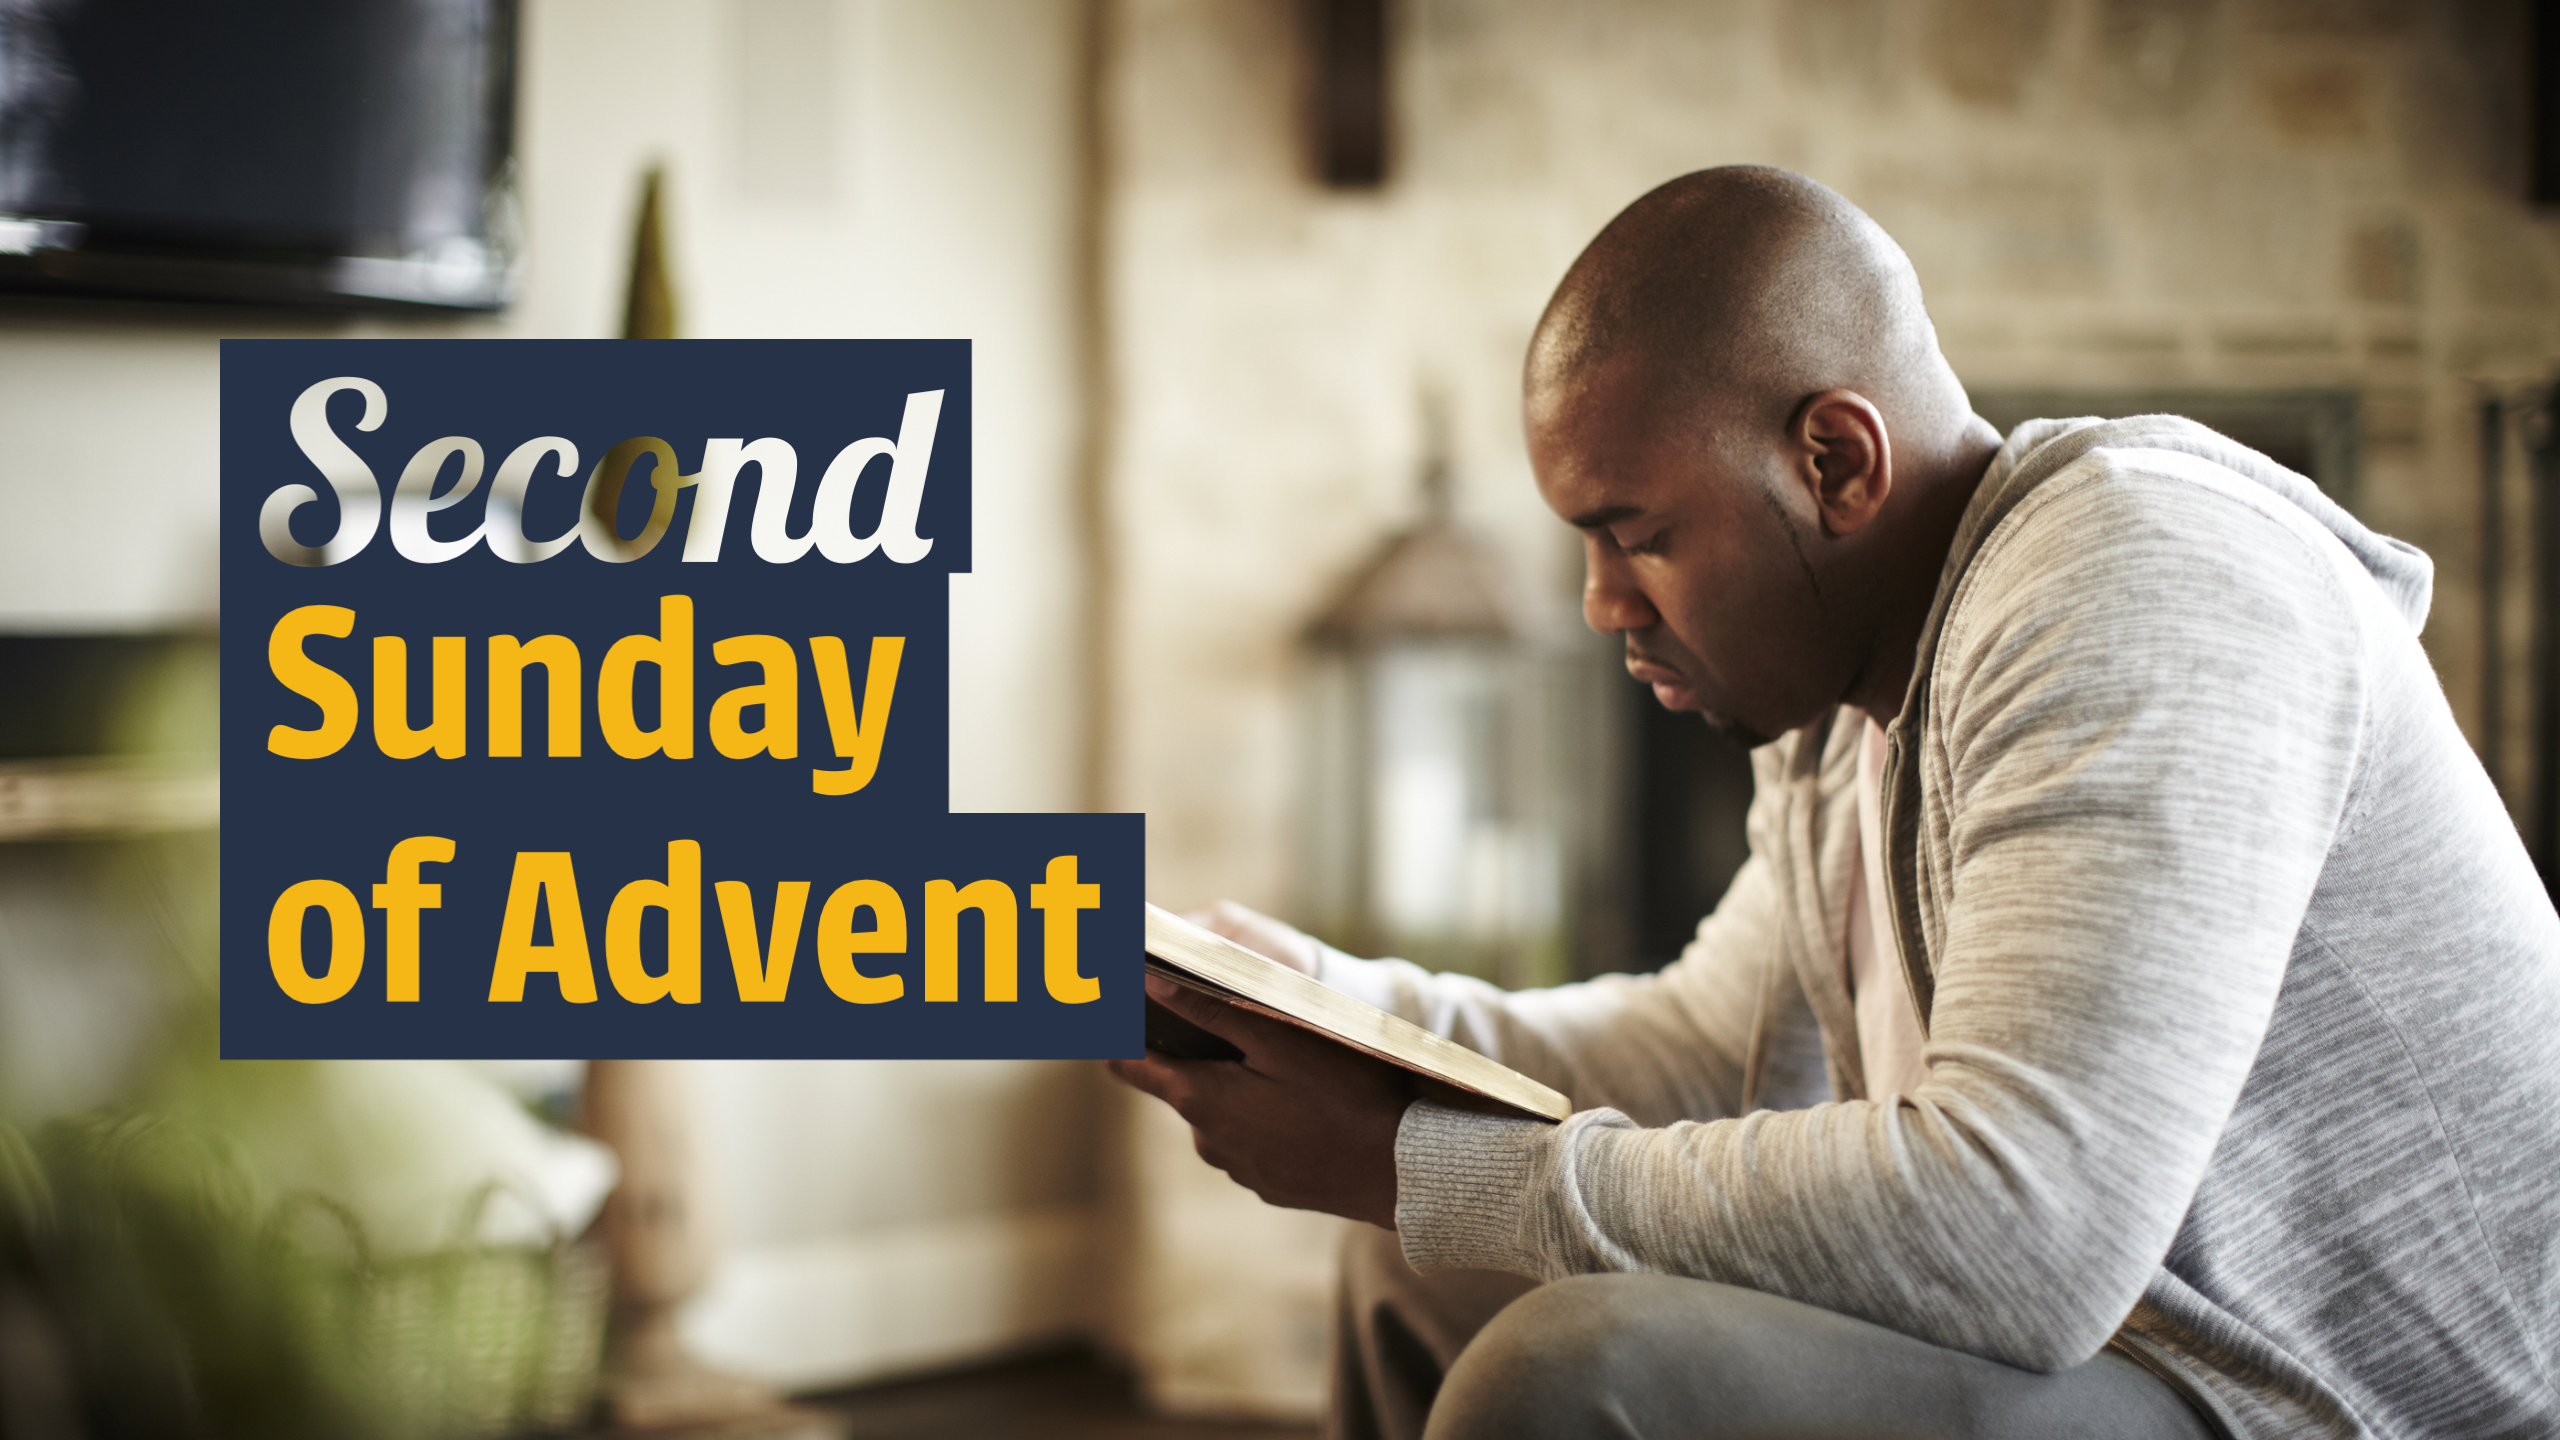 Second Sunday of Advent